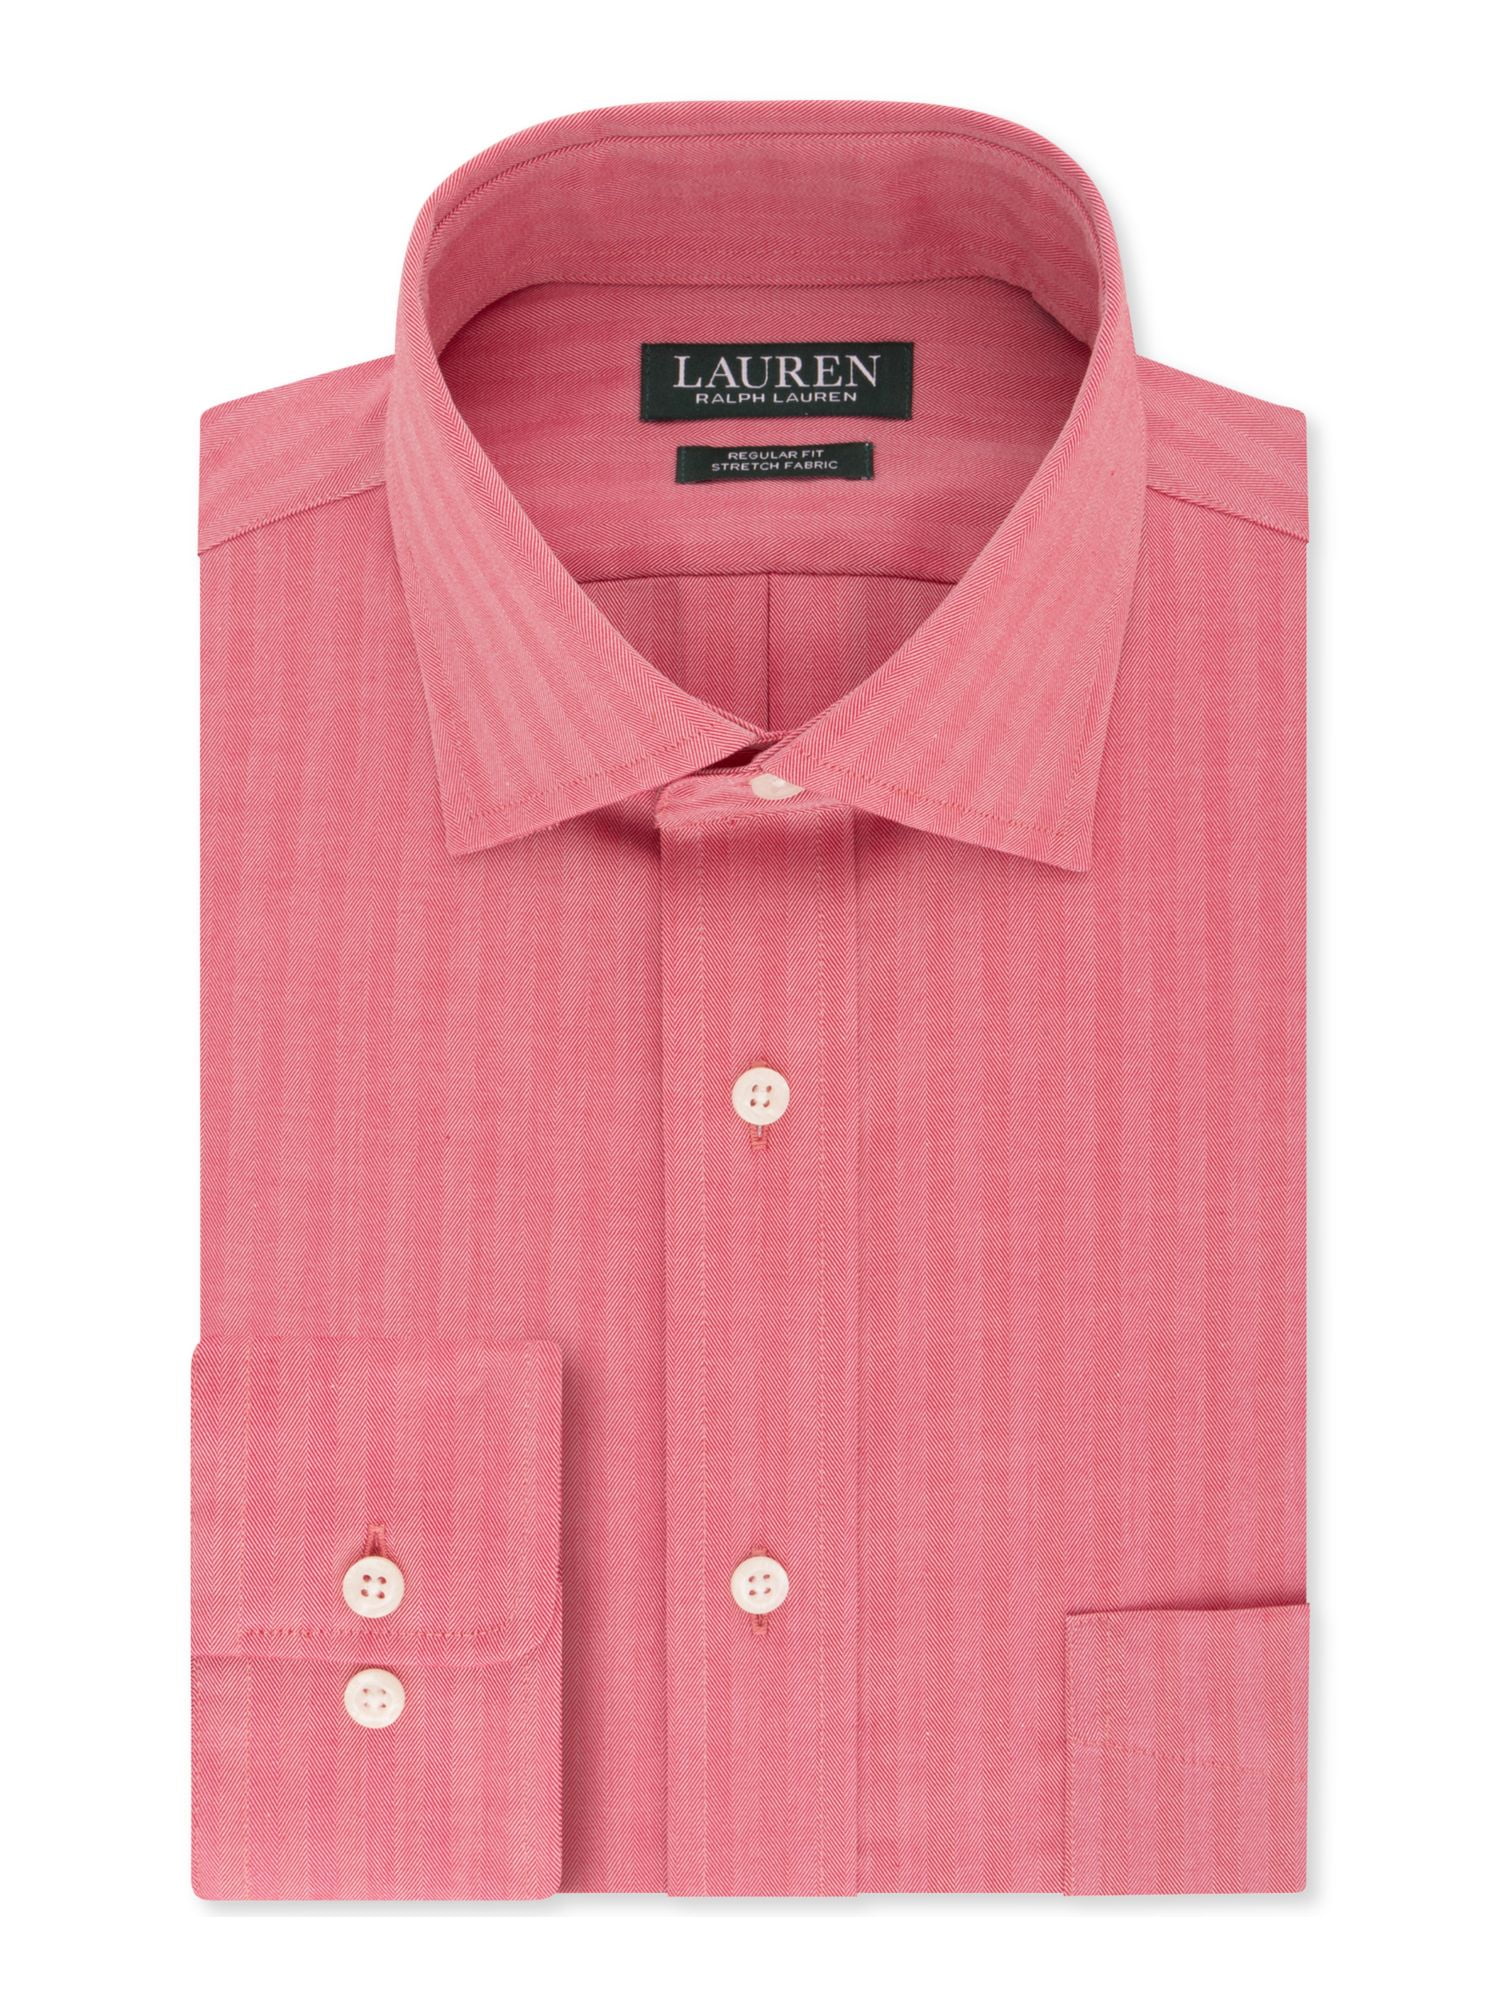 Pink Herringbone Luxury Men's Formal & Business Dress Shirt in Shorter Sleeves